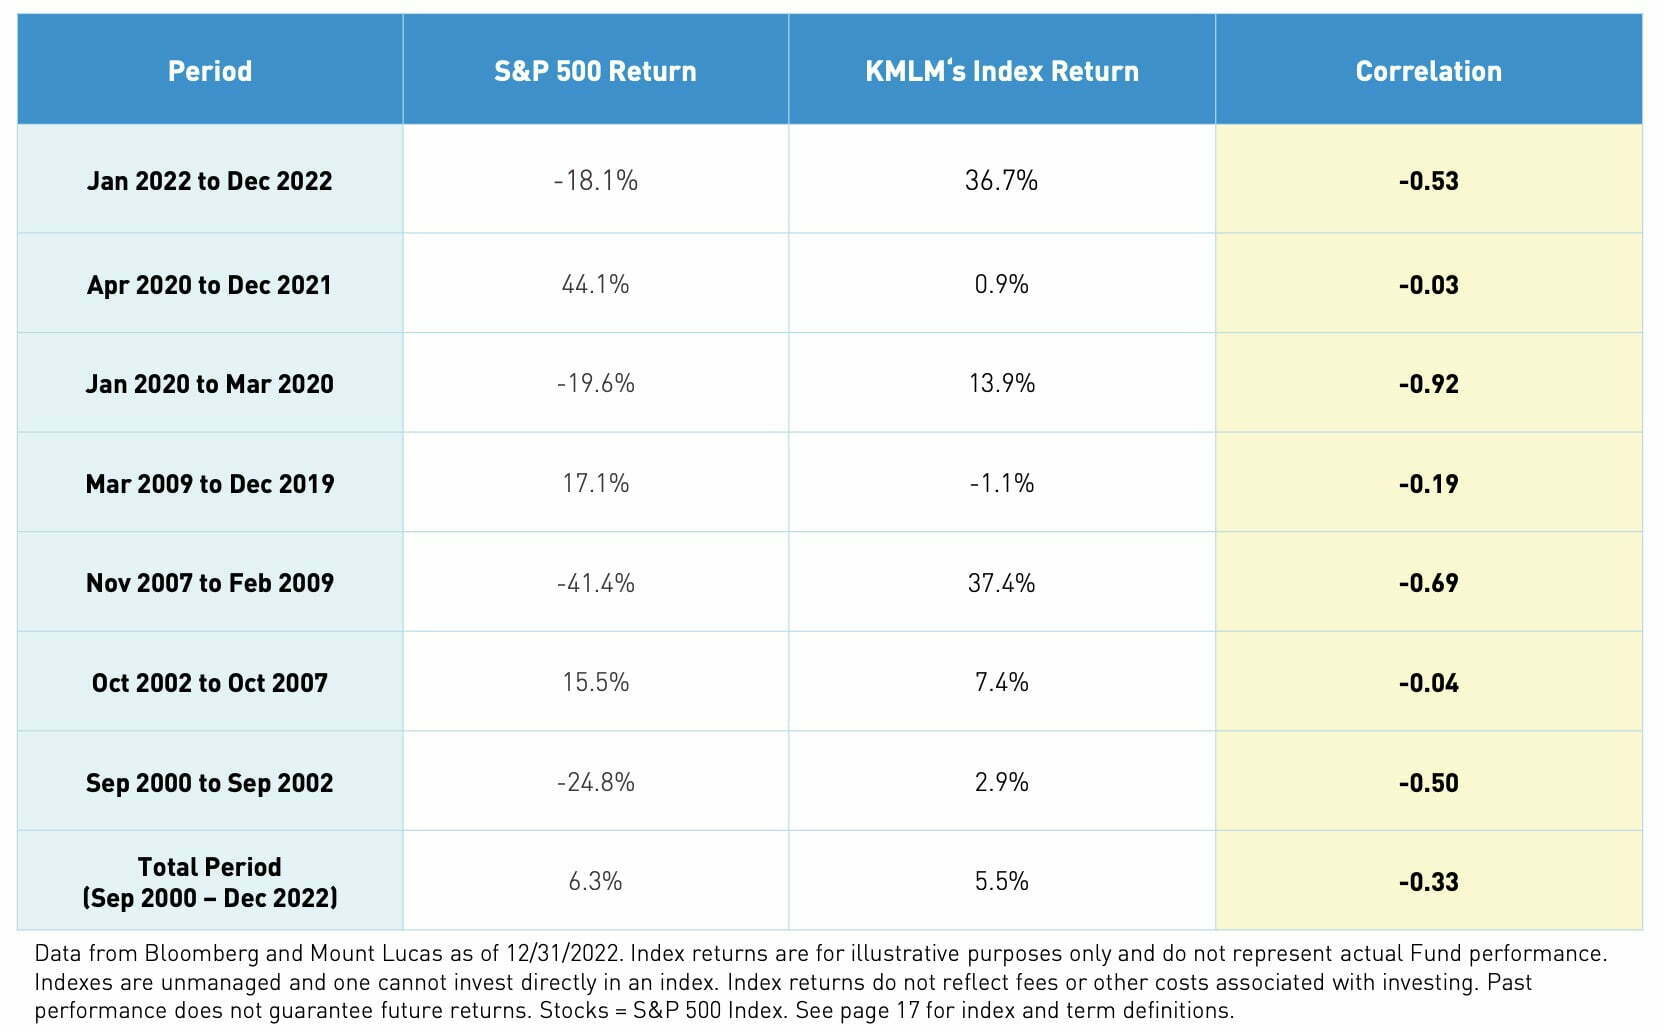 KMLM ETF Performance versus S&P 500 during market downturns